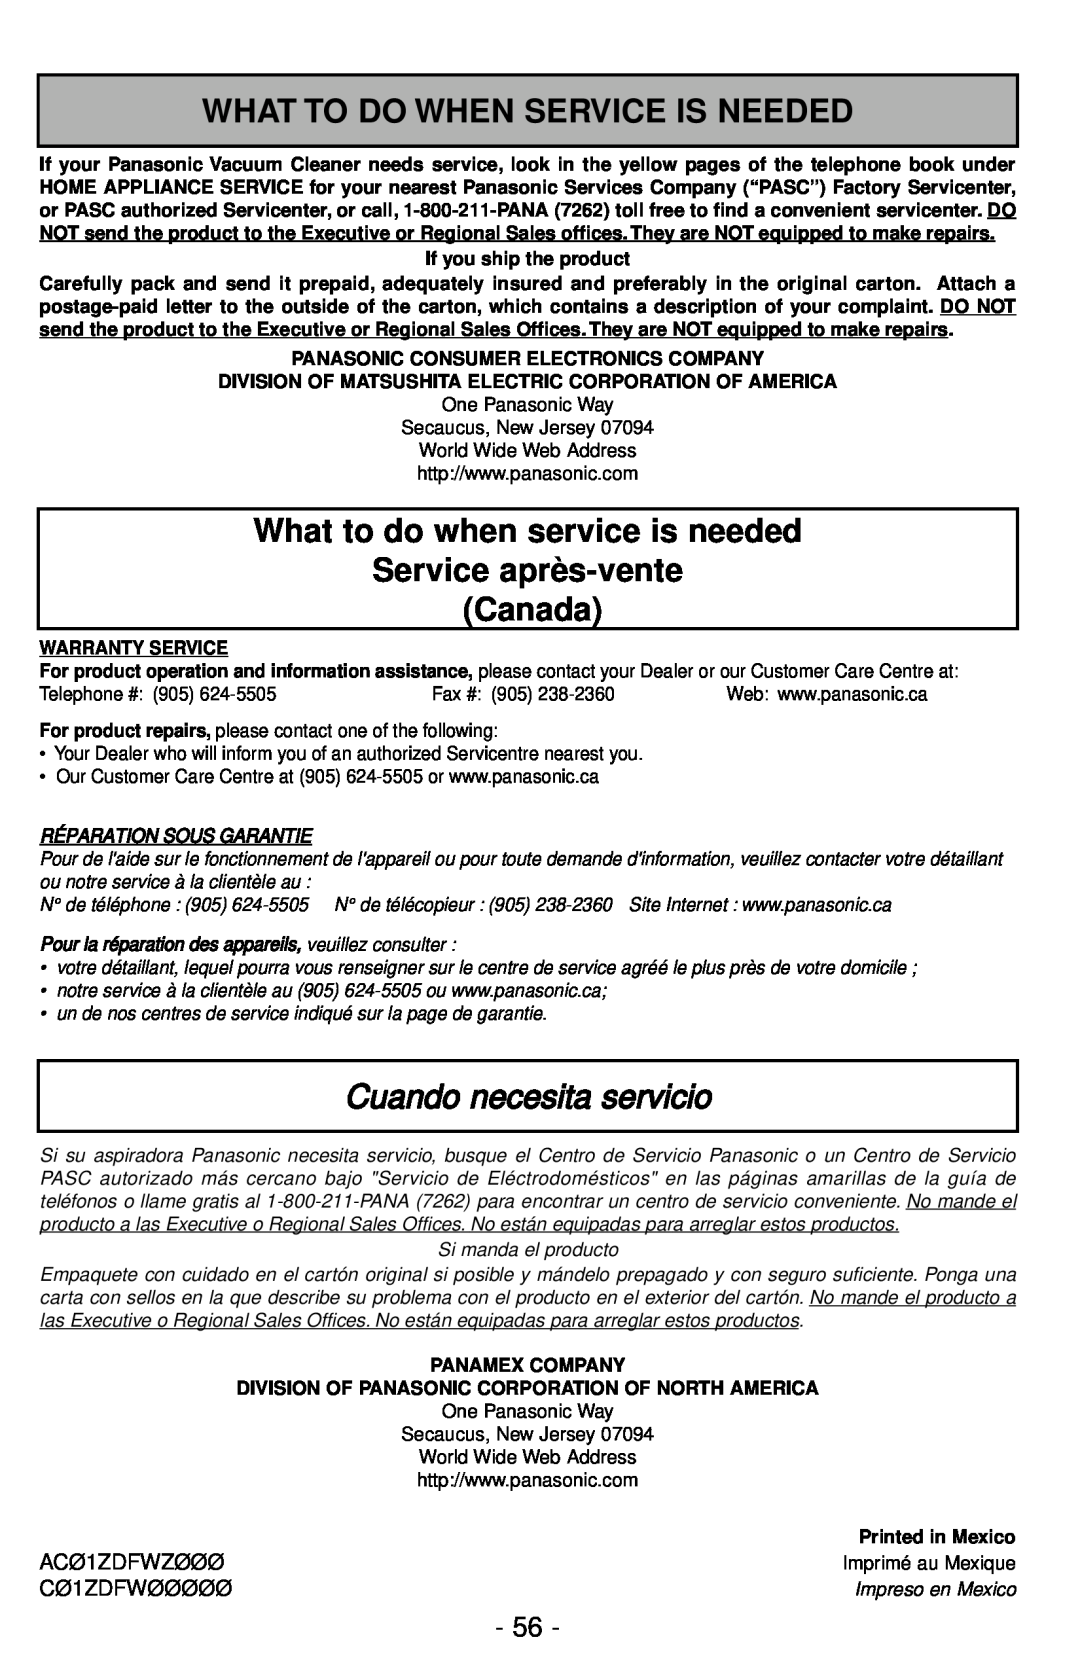 Panasonic MC-UG787 What To Do When Service Is Needed, What to do when service is needed, Service après-venteCanada 